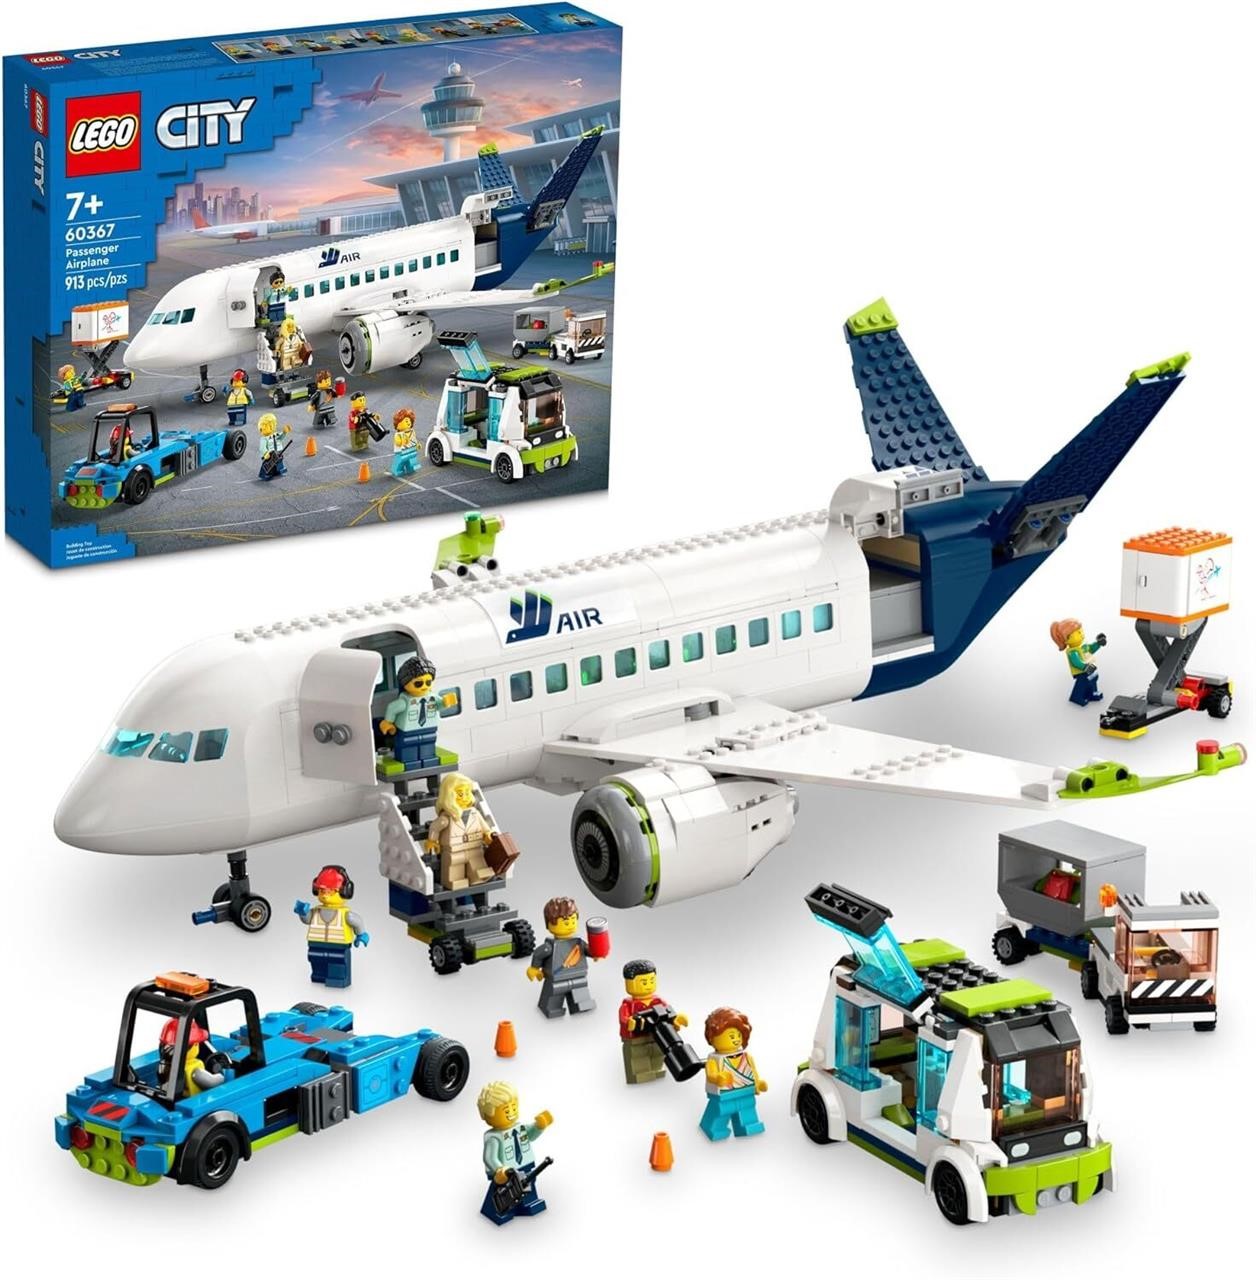 LEGO City Passenger Airplane 60367 Toy Set